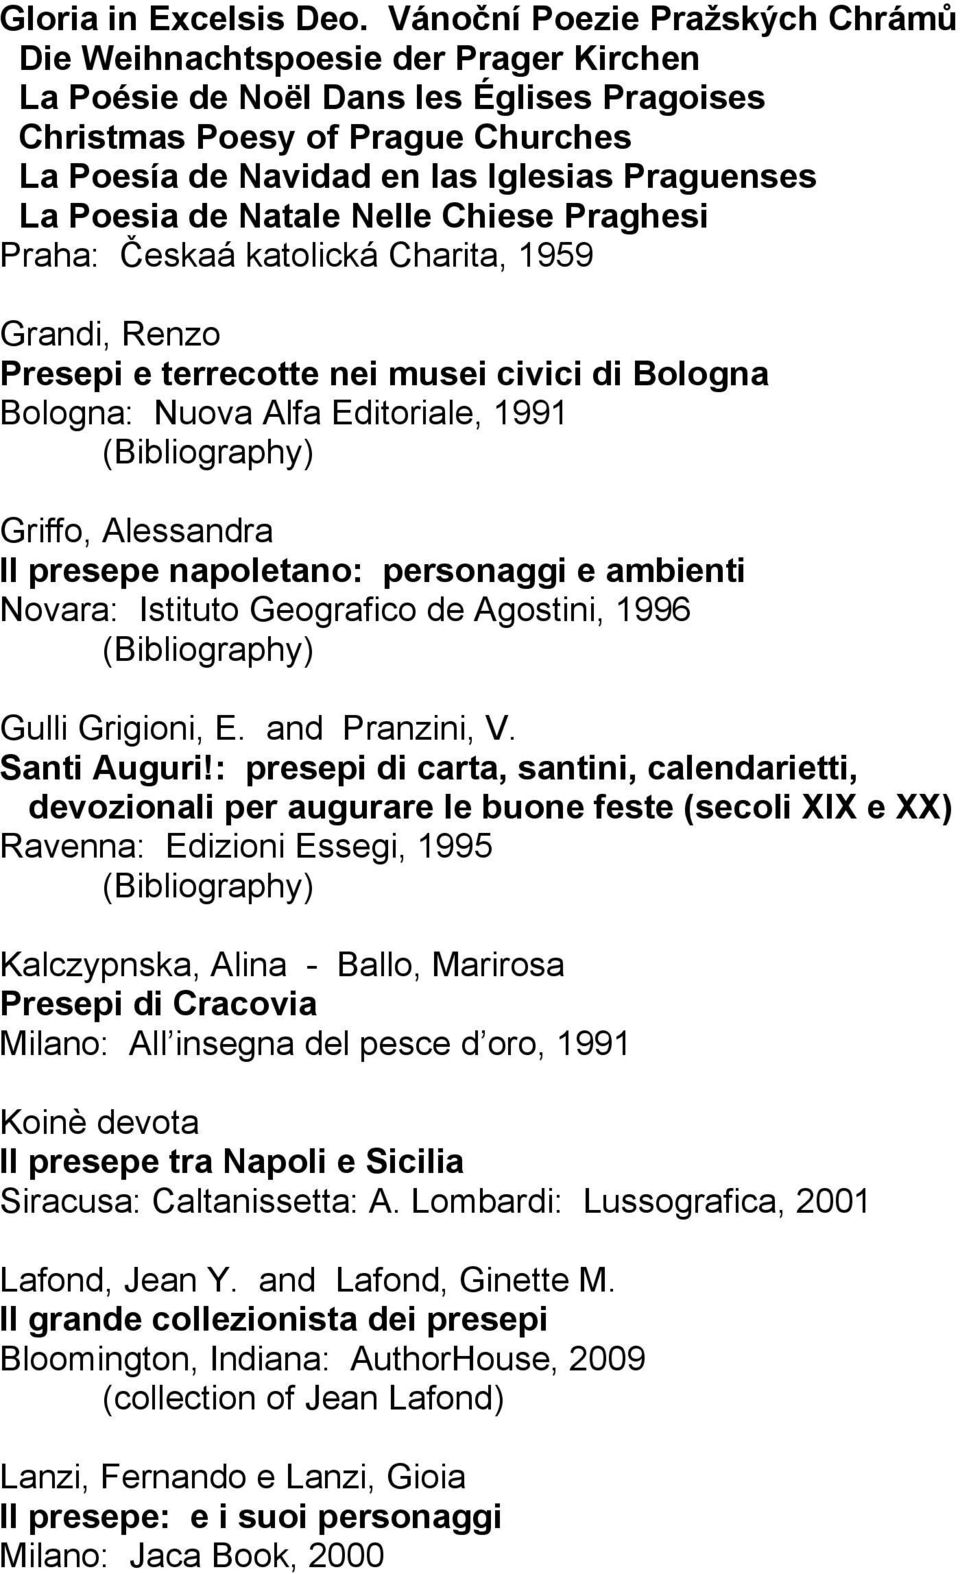 Poesie Di Natale In Napoletano.Italian Language Sources Pdf Free Download